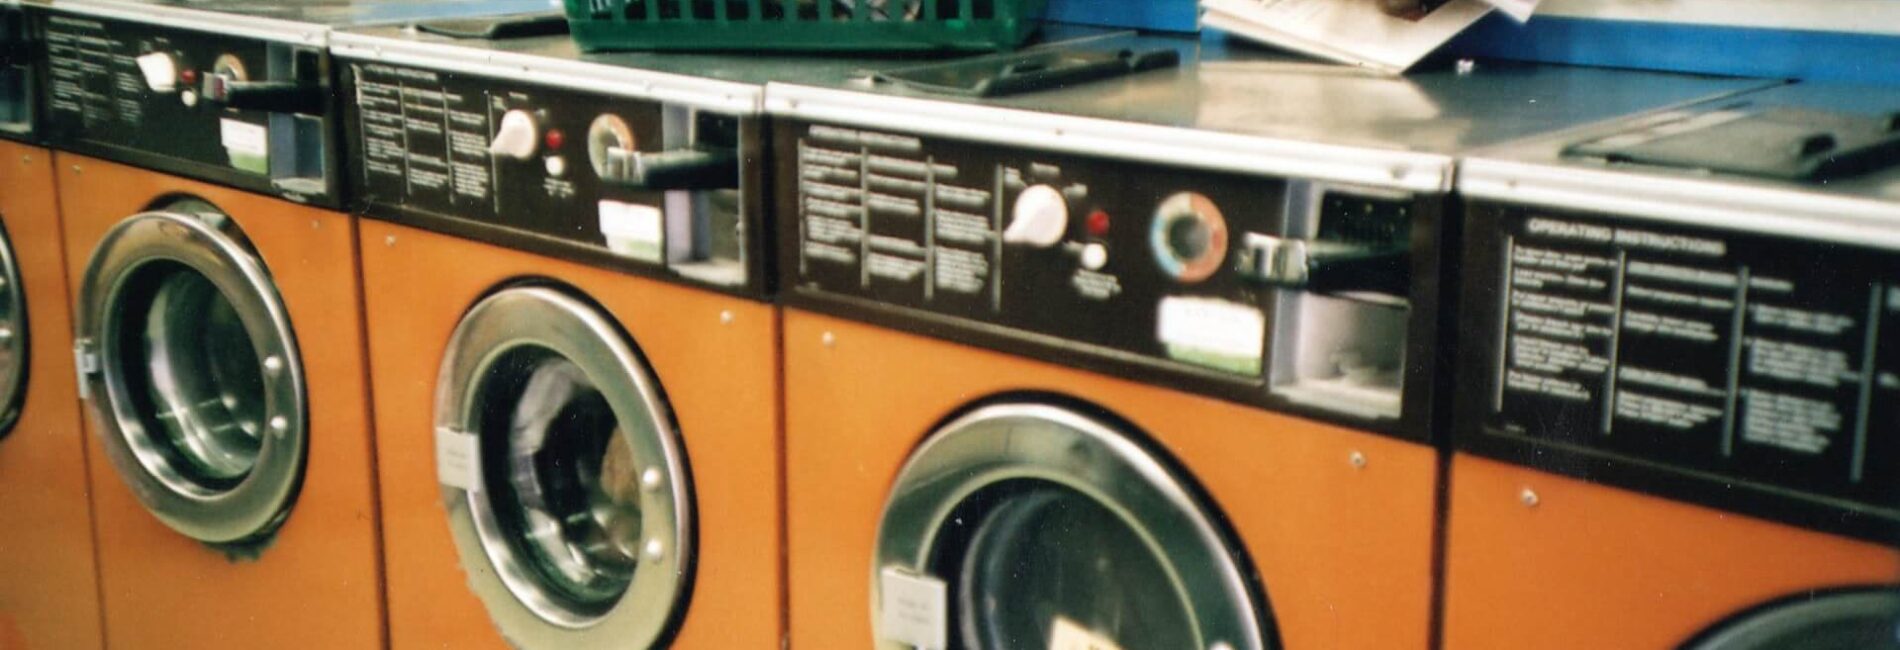 Keep Laundry Irritants to a Minimum